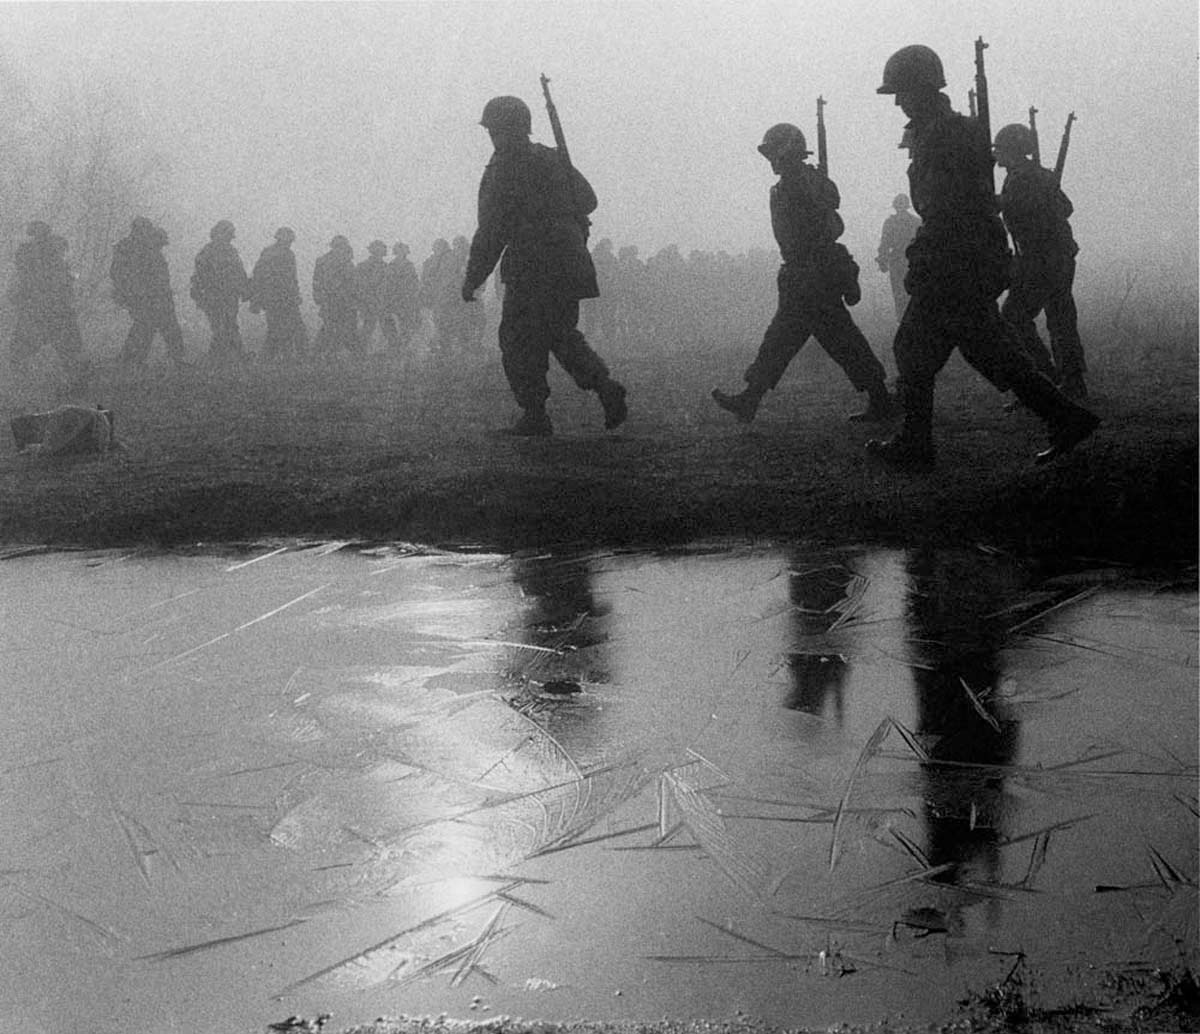 Soldiers in Icy Fog, Korea, 1953